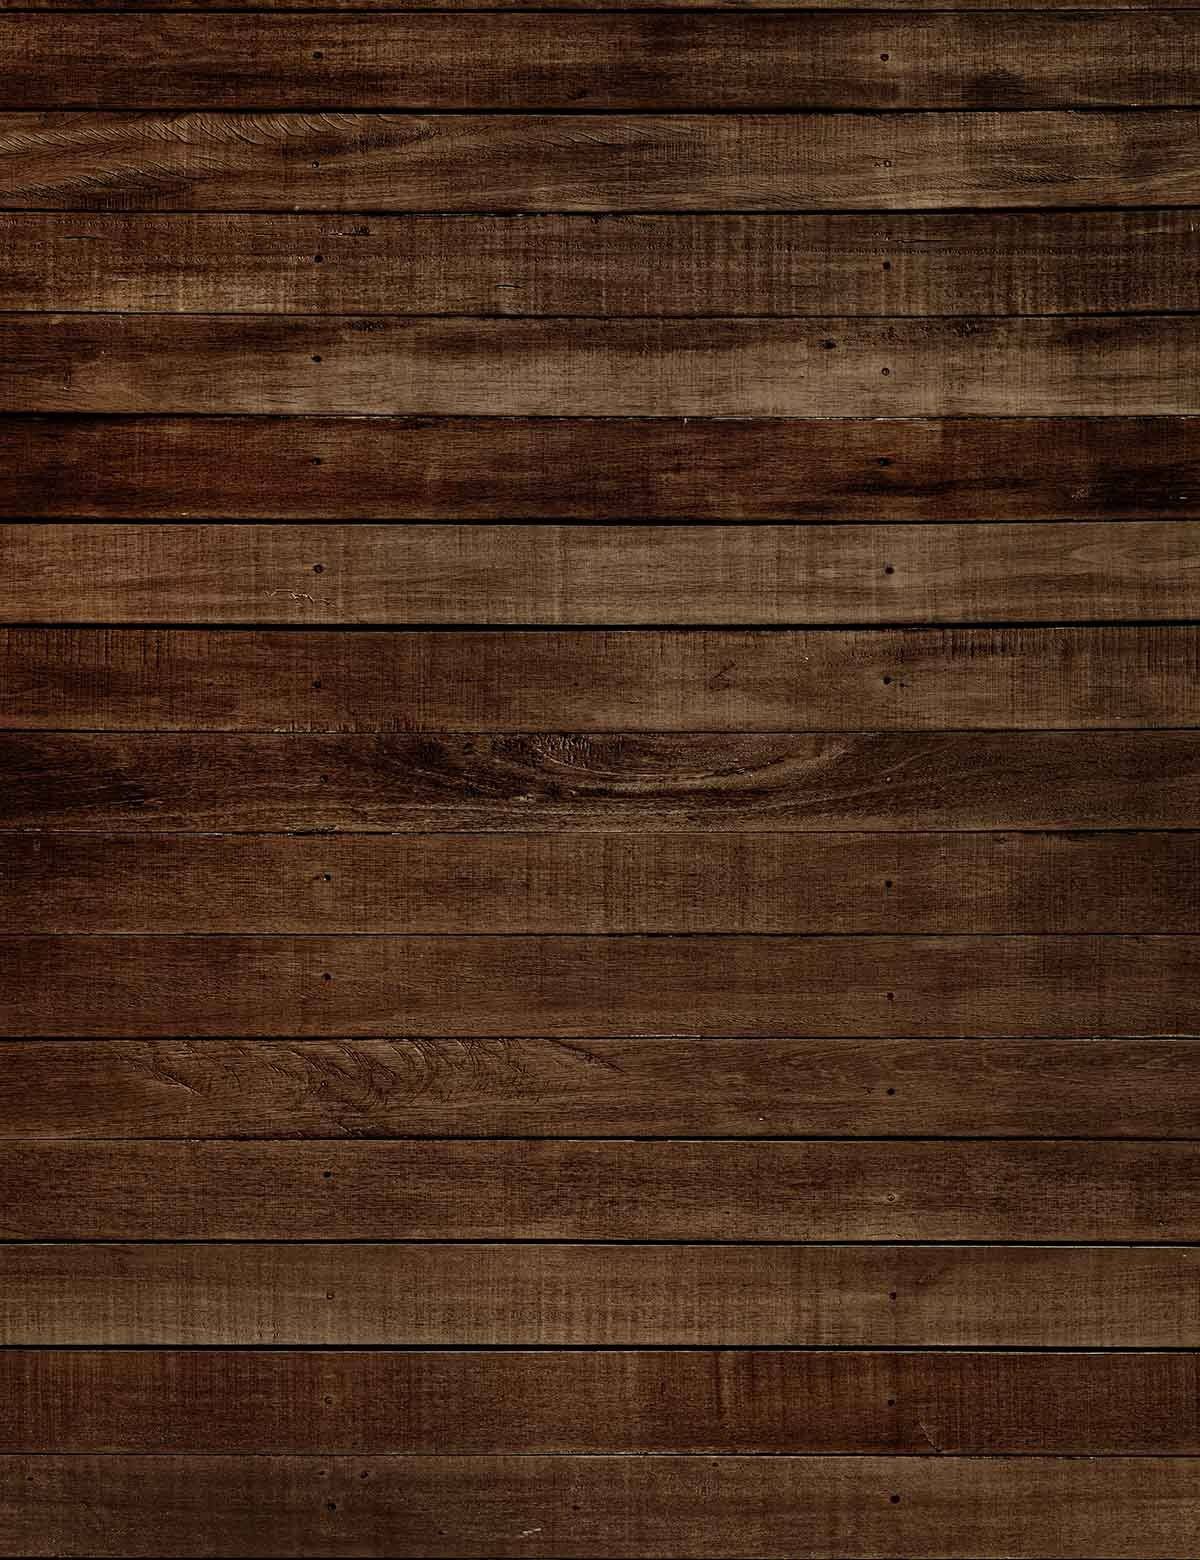 Deep Brown Wood Floor Texture Backdrop For Photography Shopbackdrop